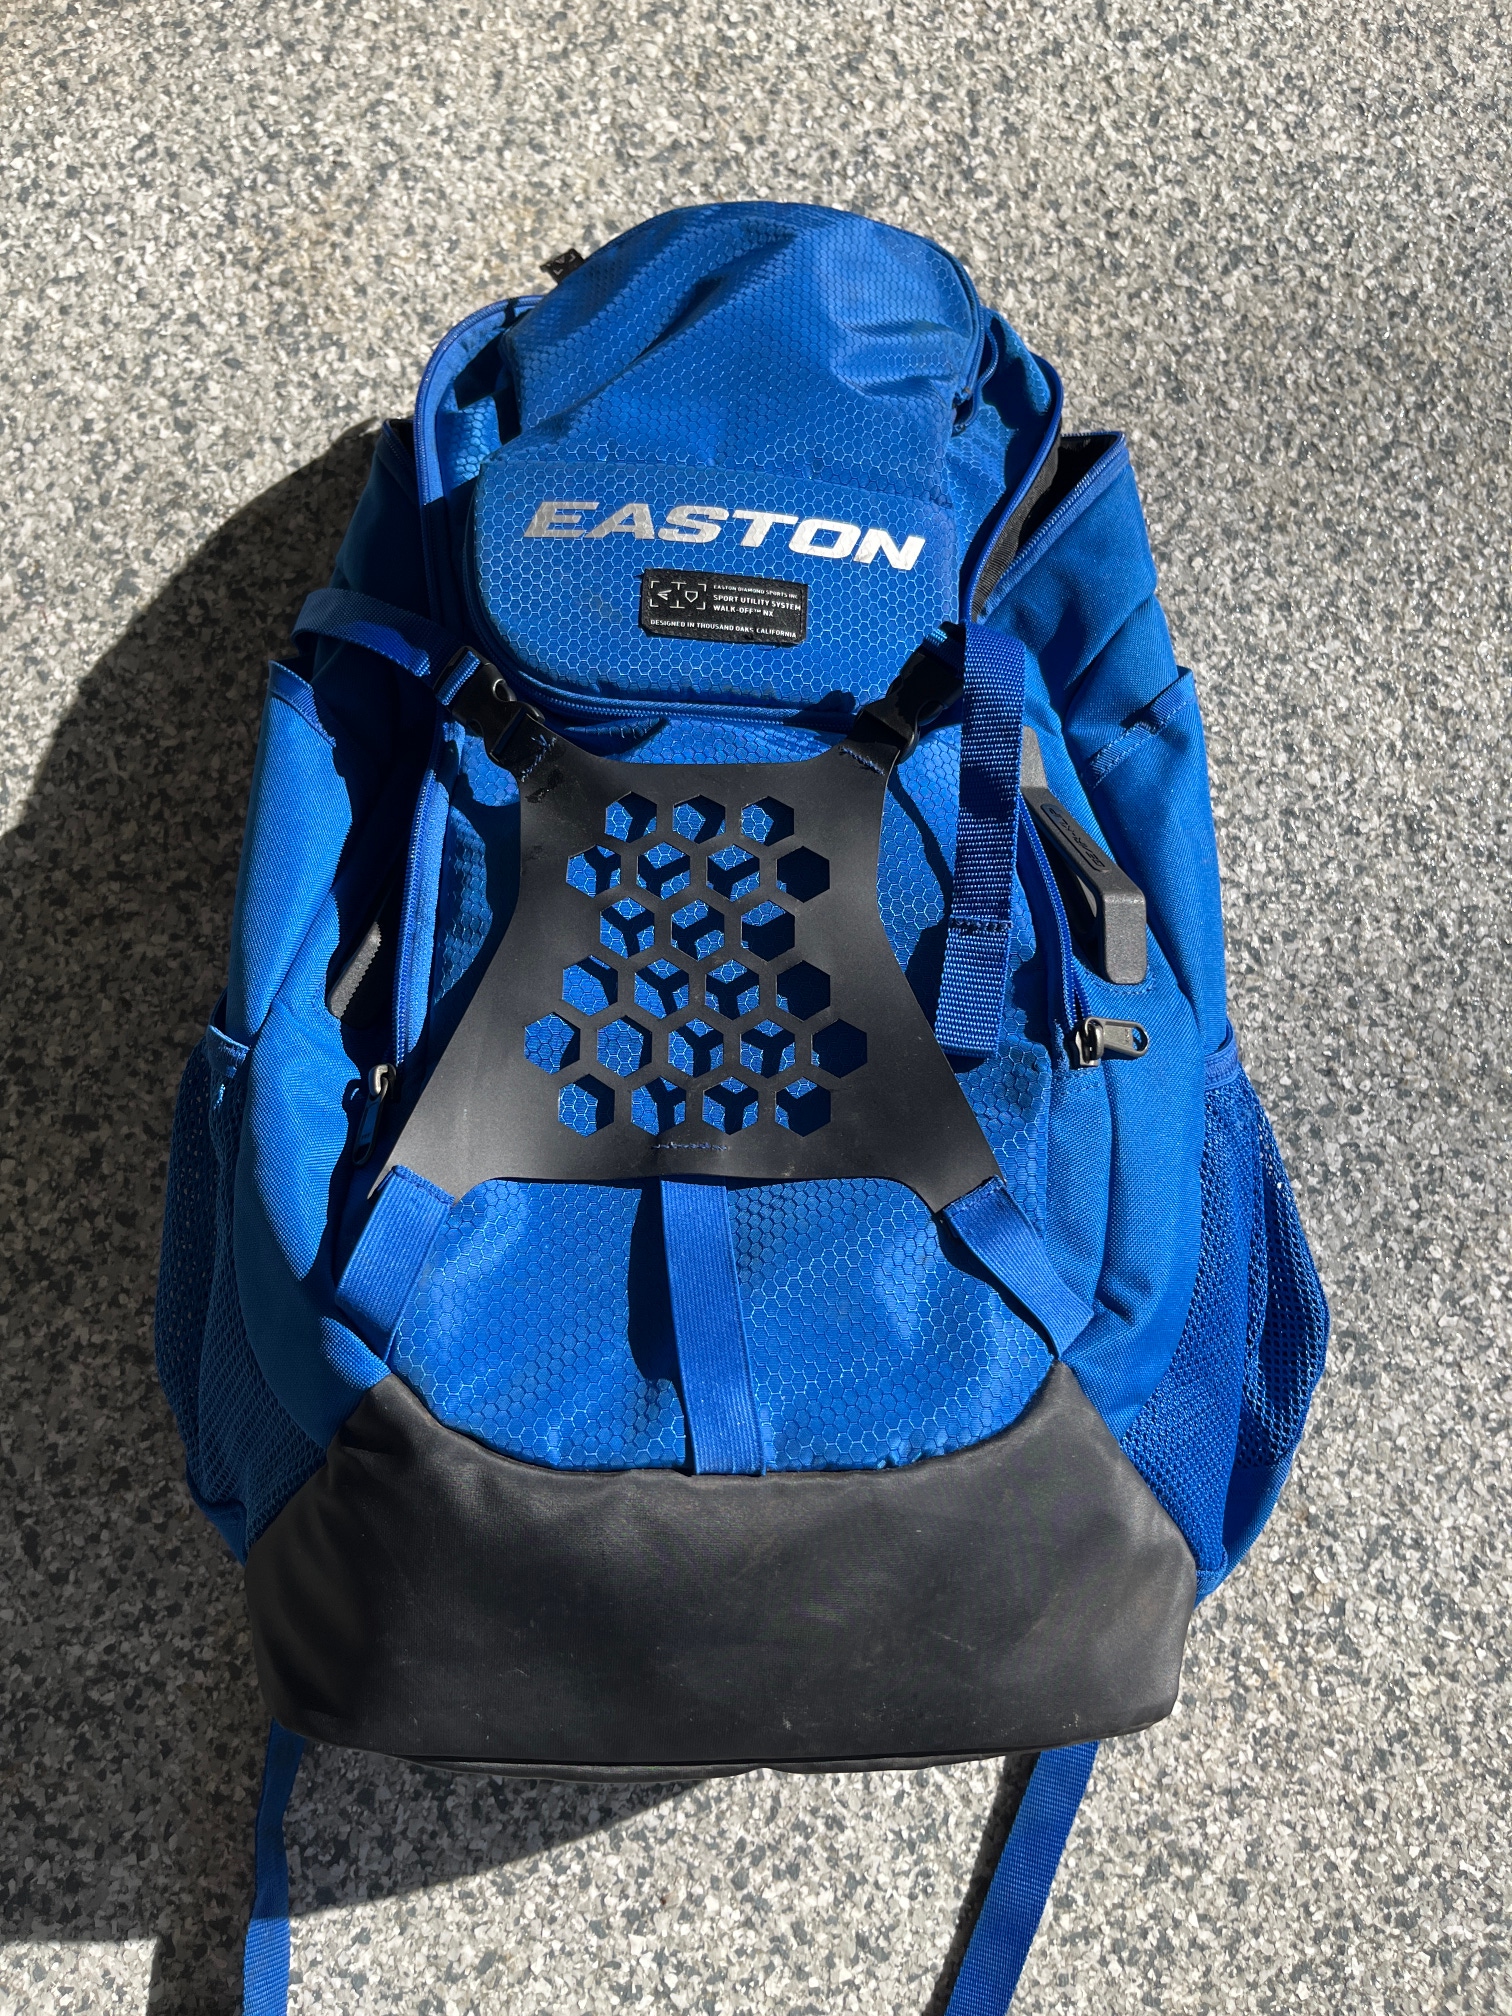 Easton Walk Off NX Elite Bag